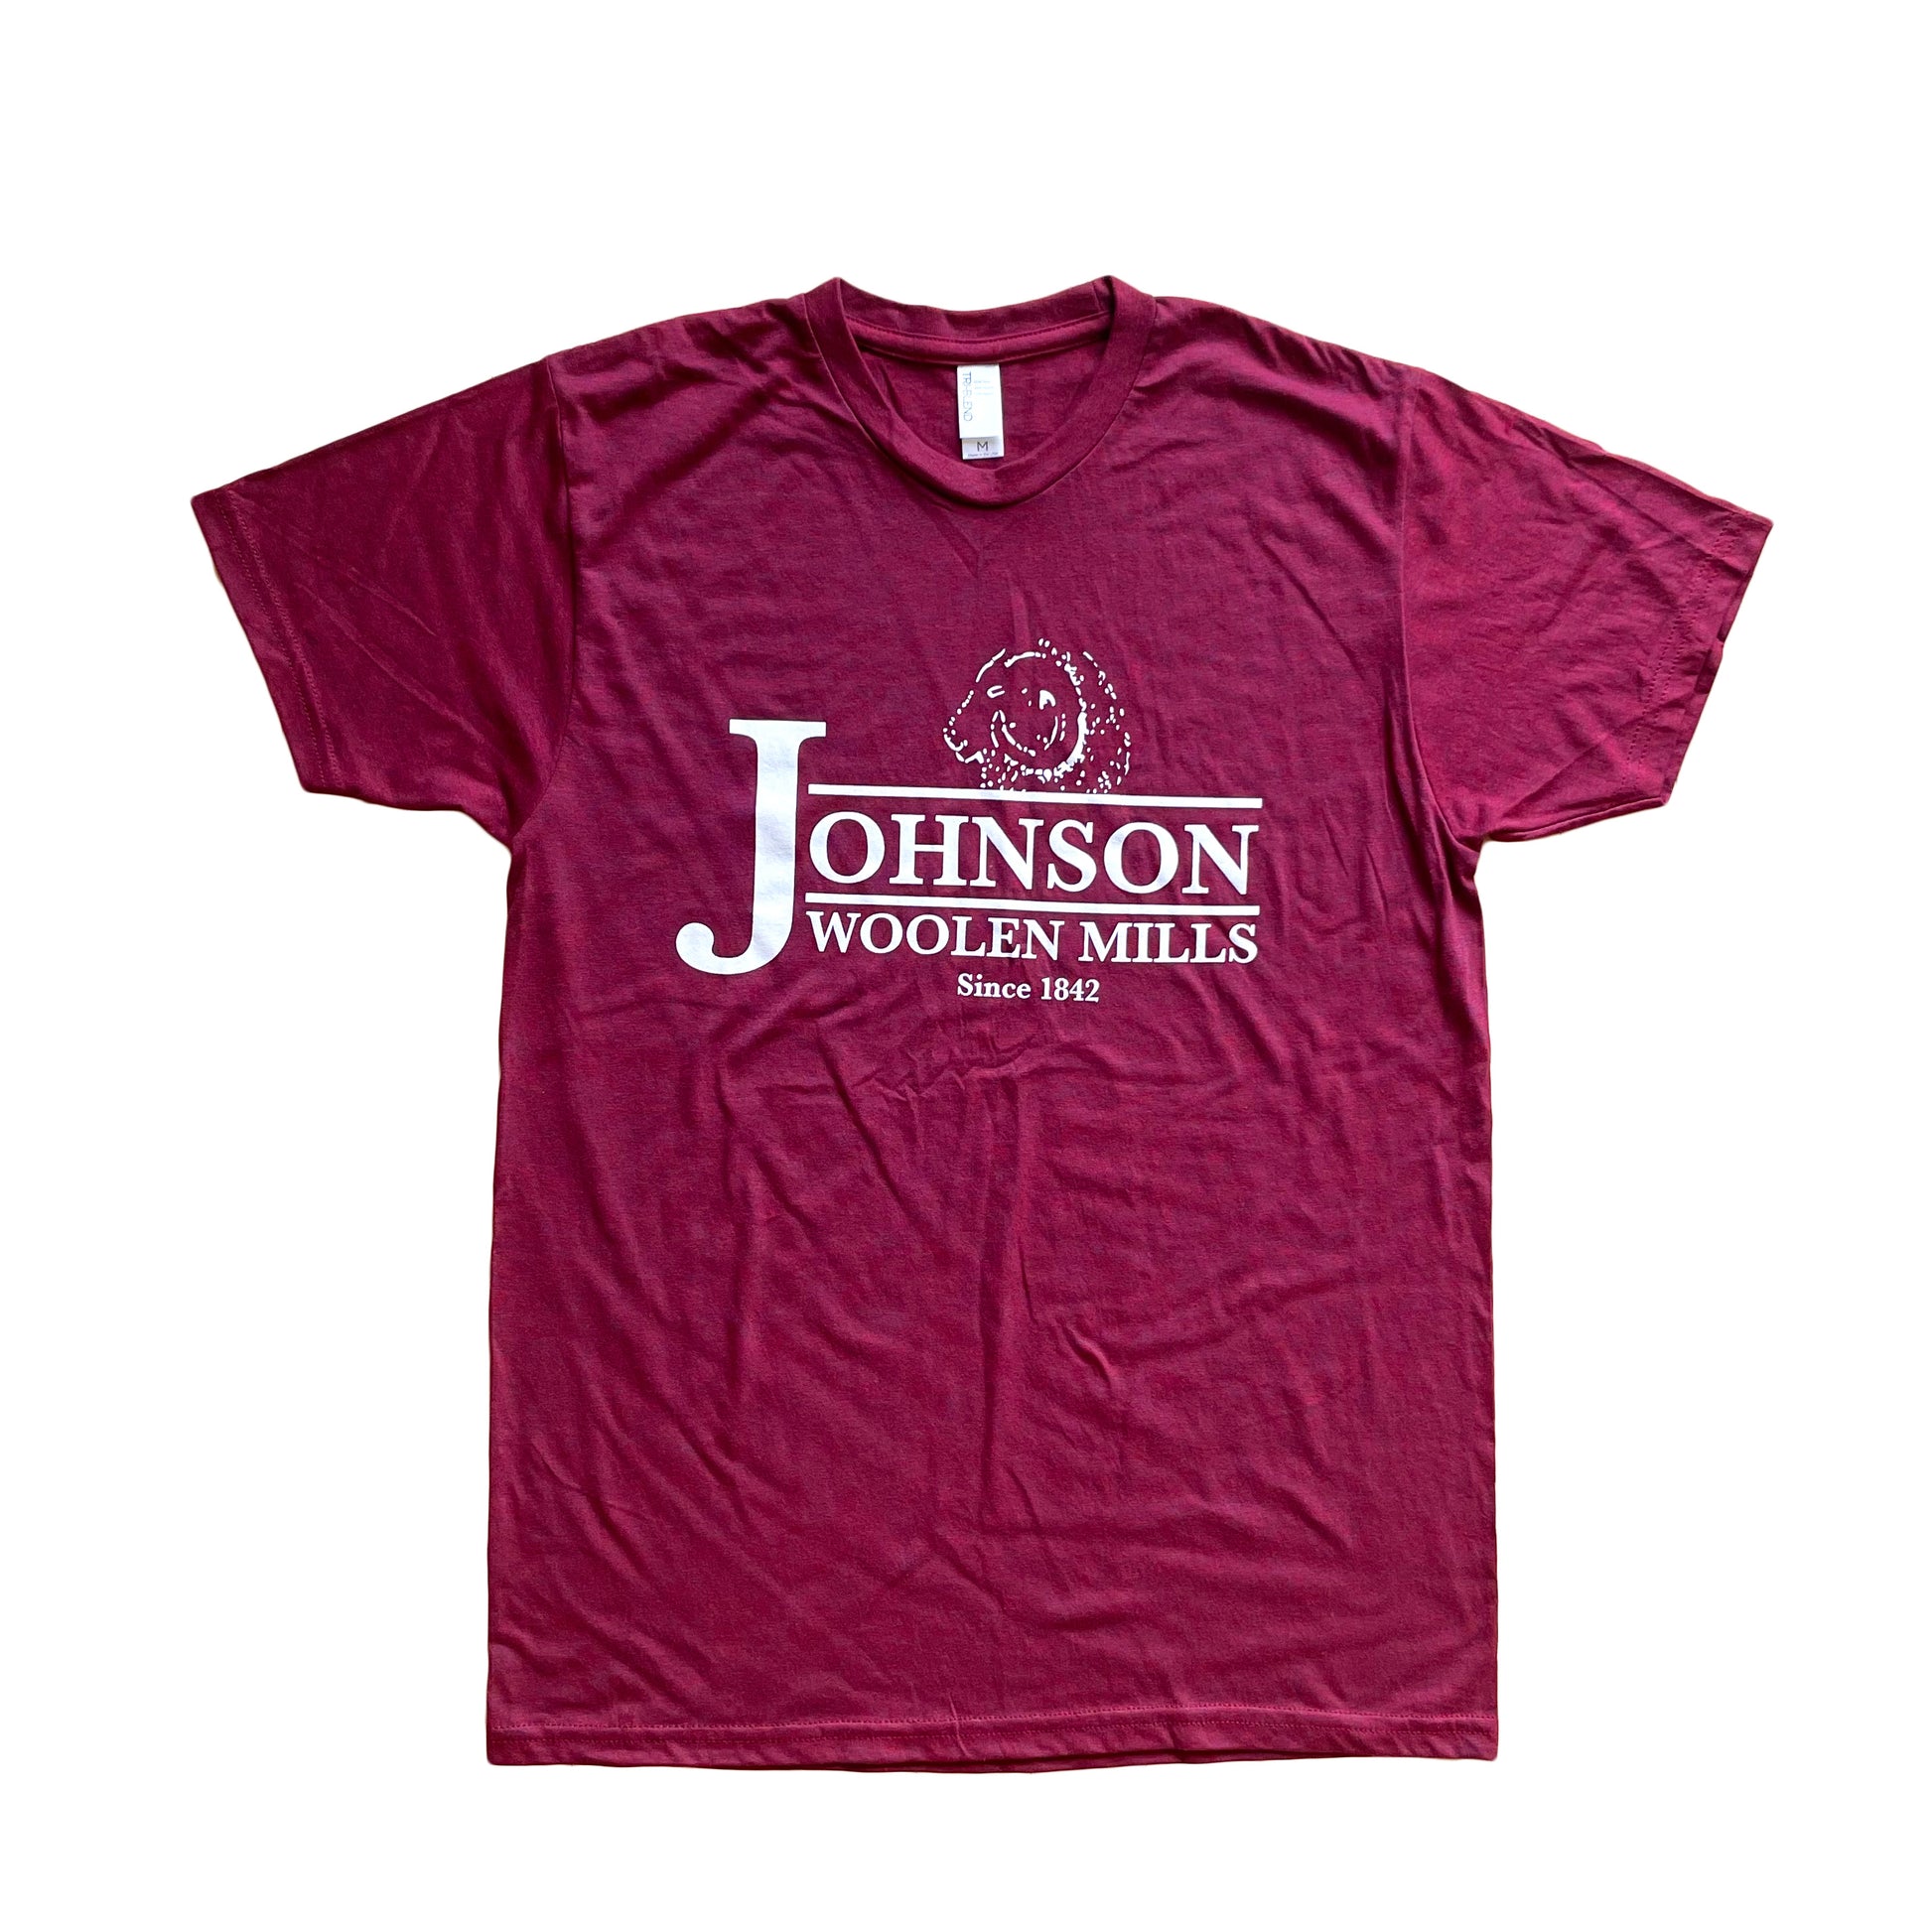 Johnson Woolen Mills T-shirt in cranberry color